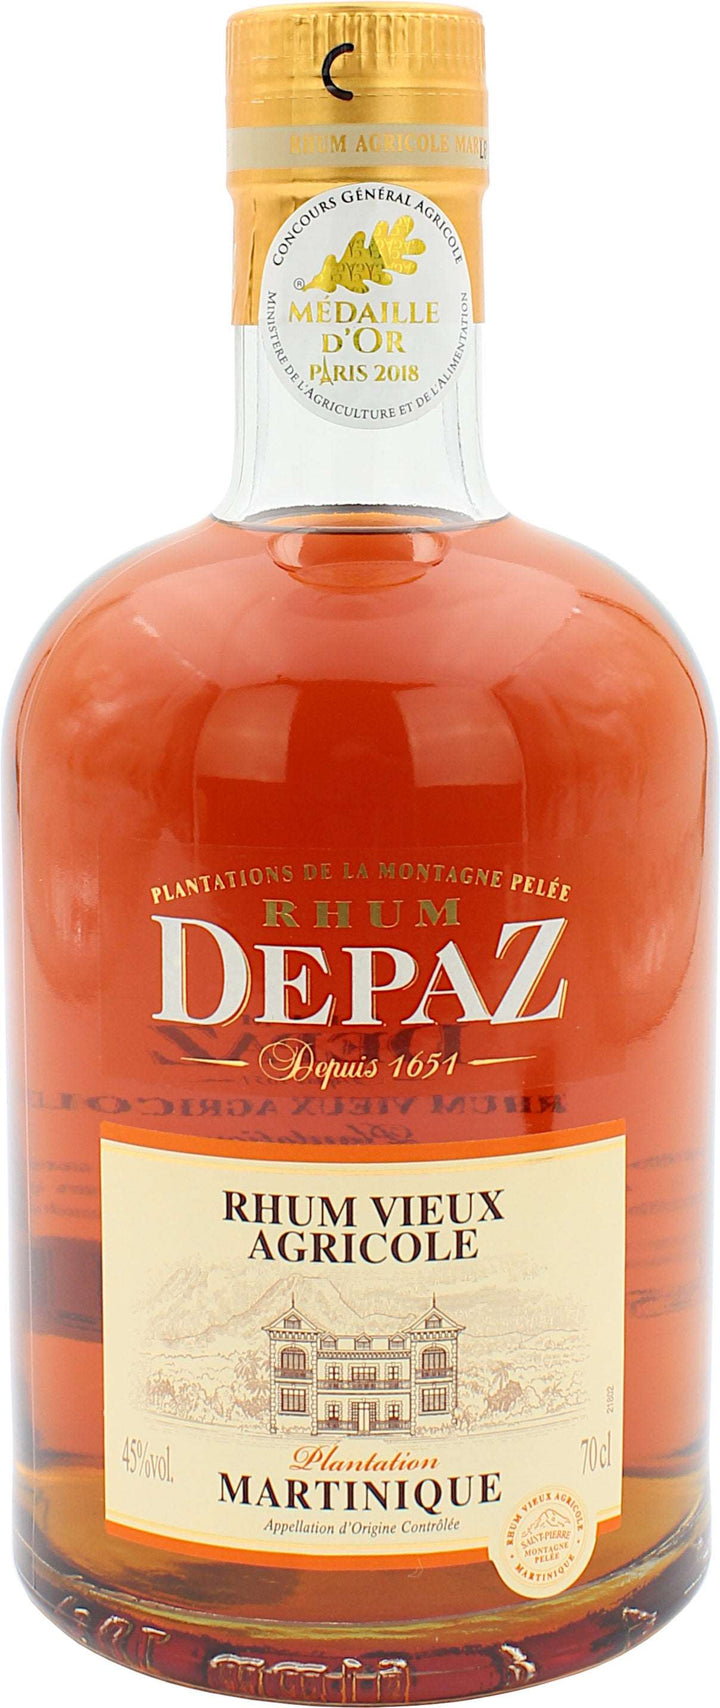 Depaz Vieux Plantation Rhum Agricole - 0.7l Flasche - TRY IT! Tastings